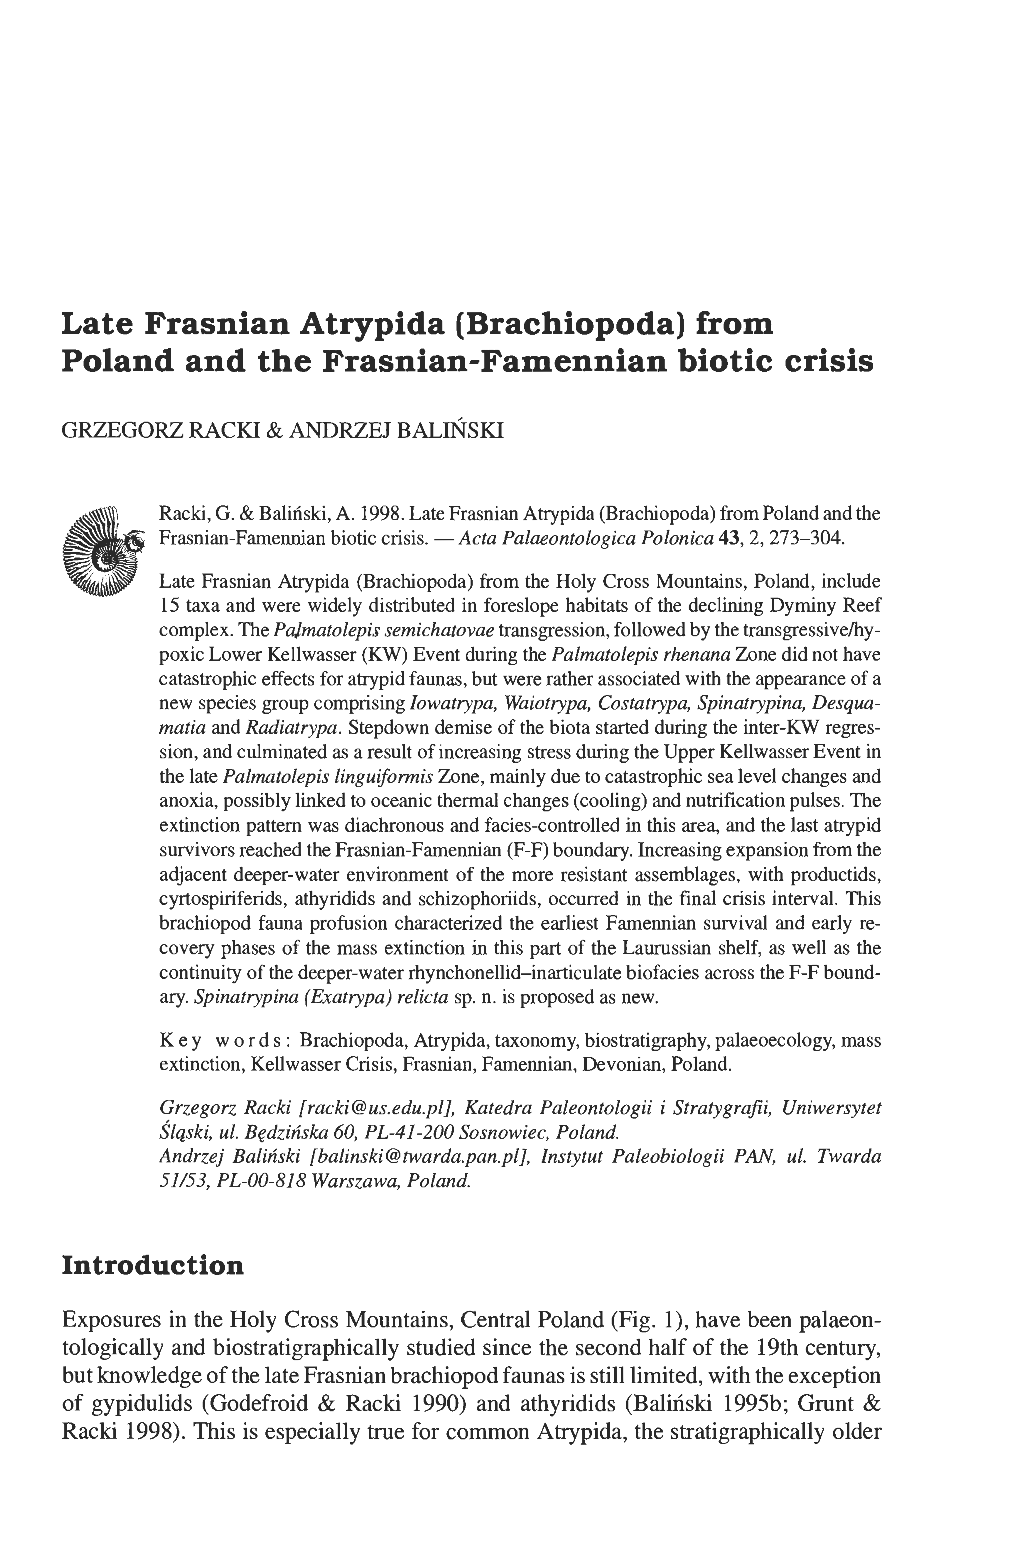 Brachiopoda)From Poland and the Frasnian-Famennian Biotic Crisis